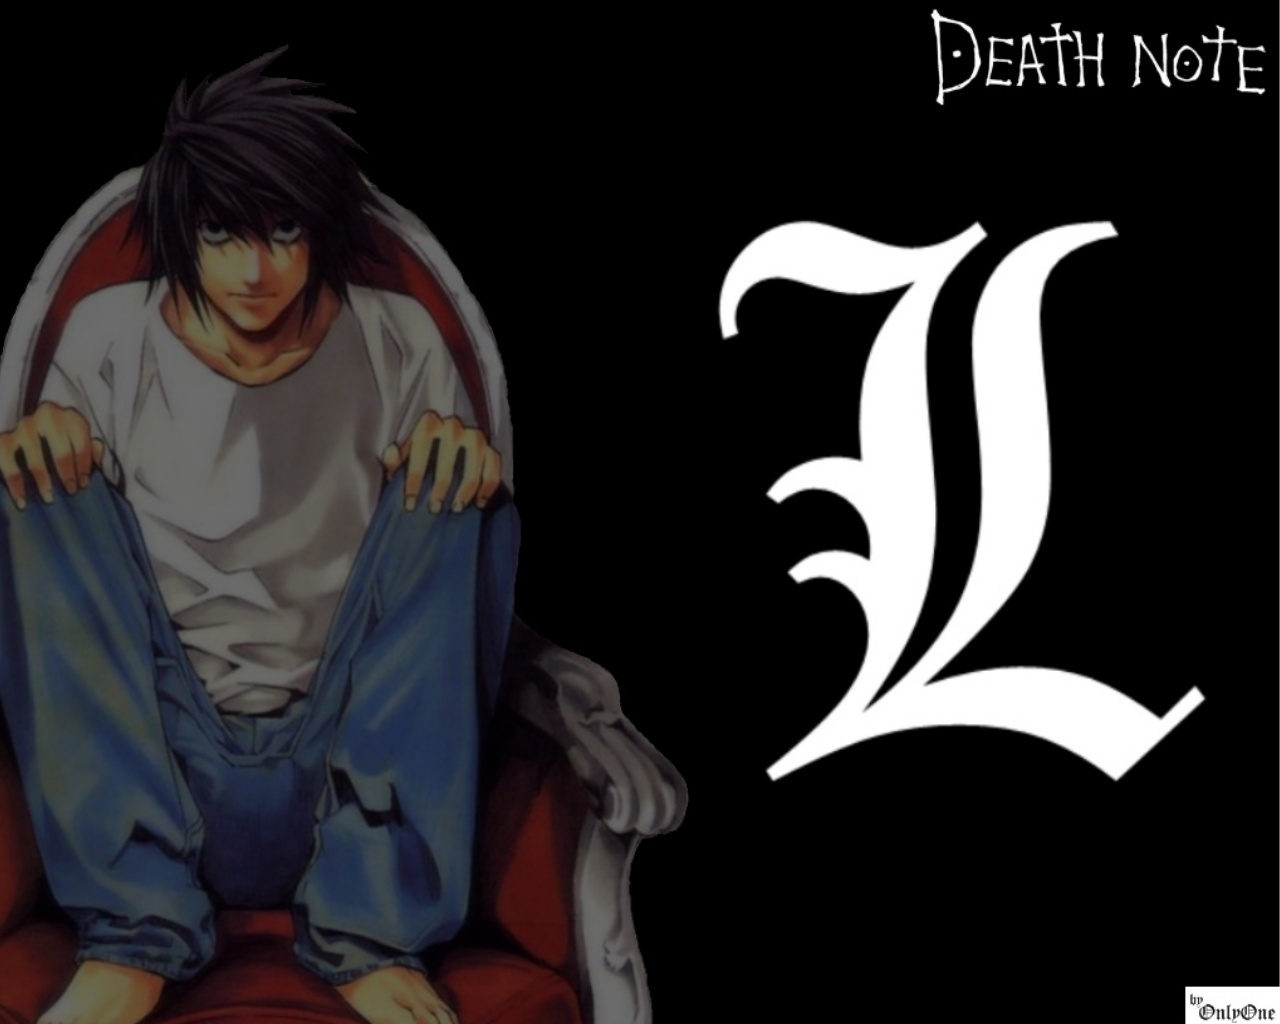 Death Note - Death Note Wallpaper (16487403) - Fanpop - Page 83